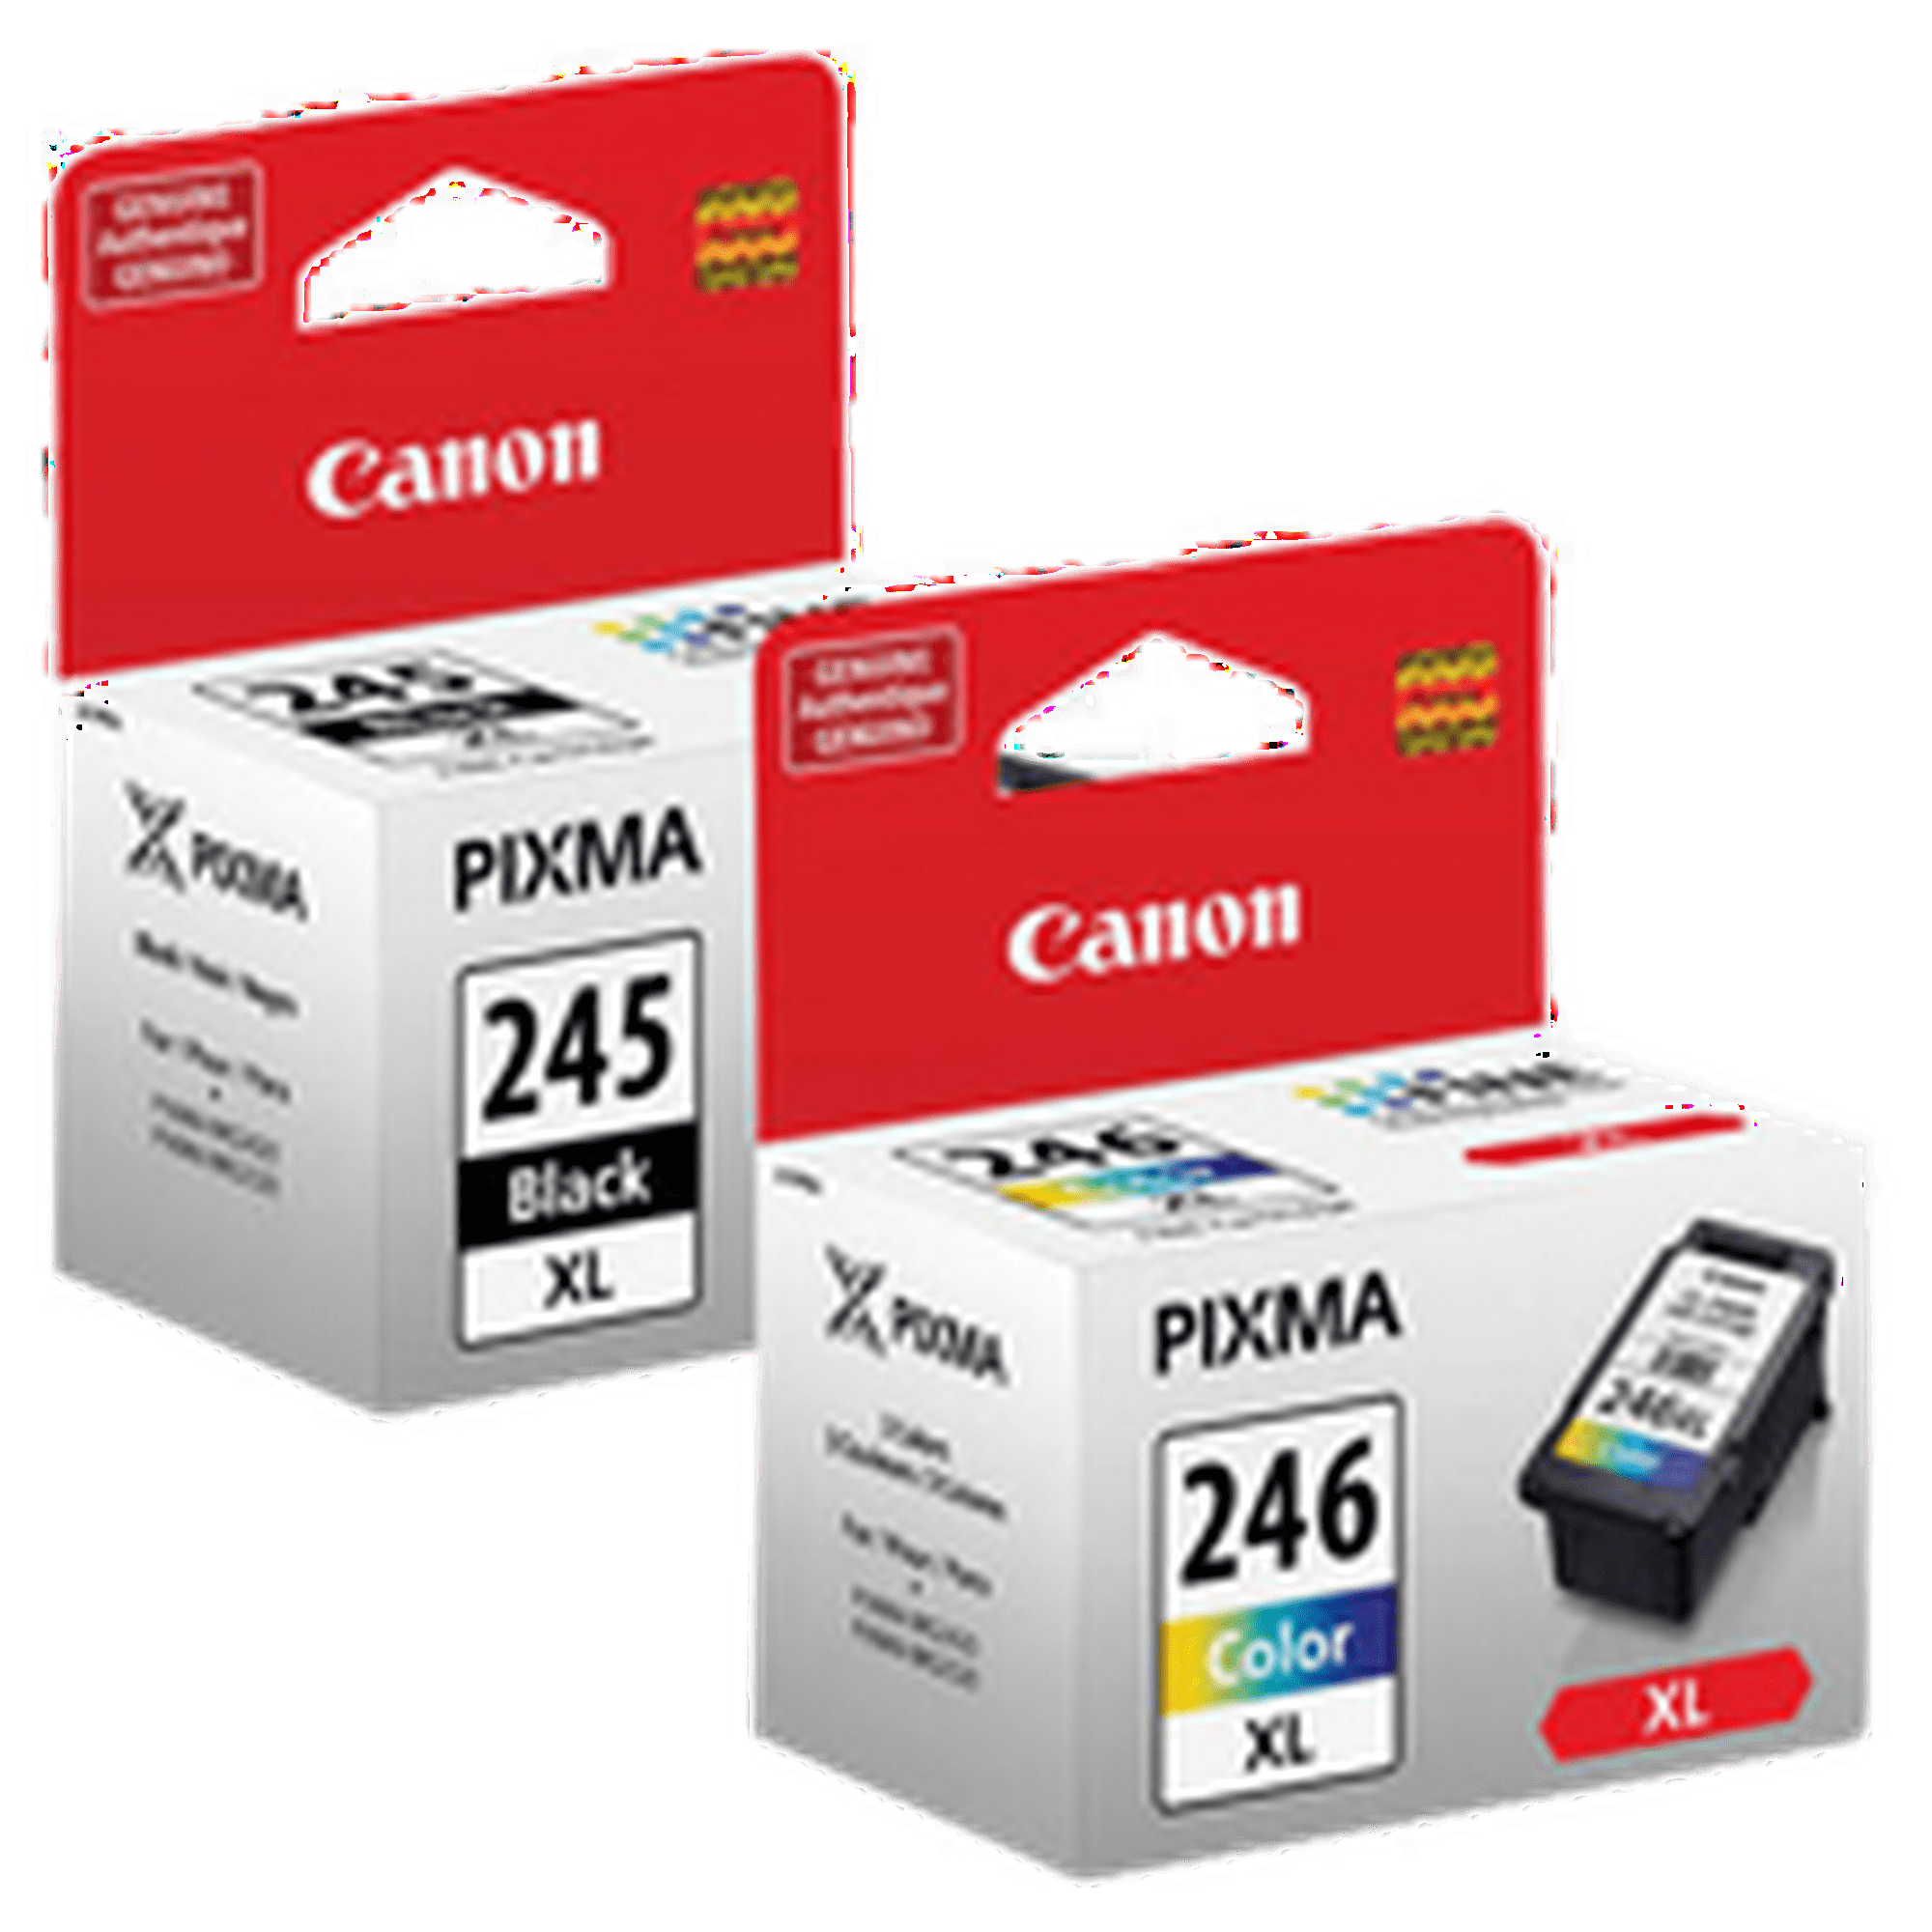 Canon mg2500 картридж. Canon MG 2500 PIXMA Color Black. Canon mg2500 чернила. Картридж Canon MP 2500. Canon mg2500 series